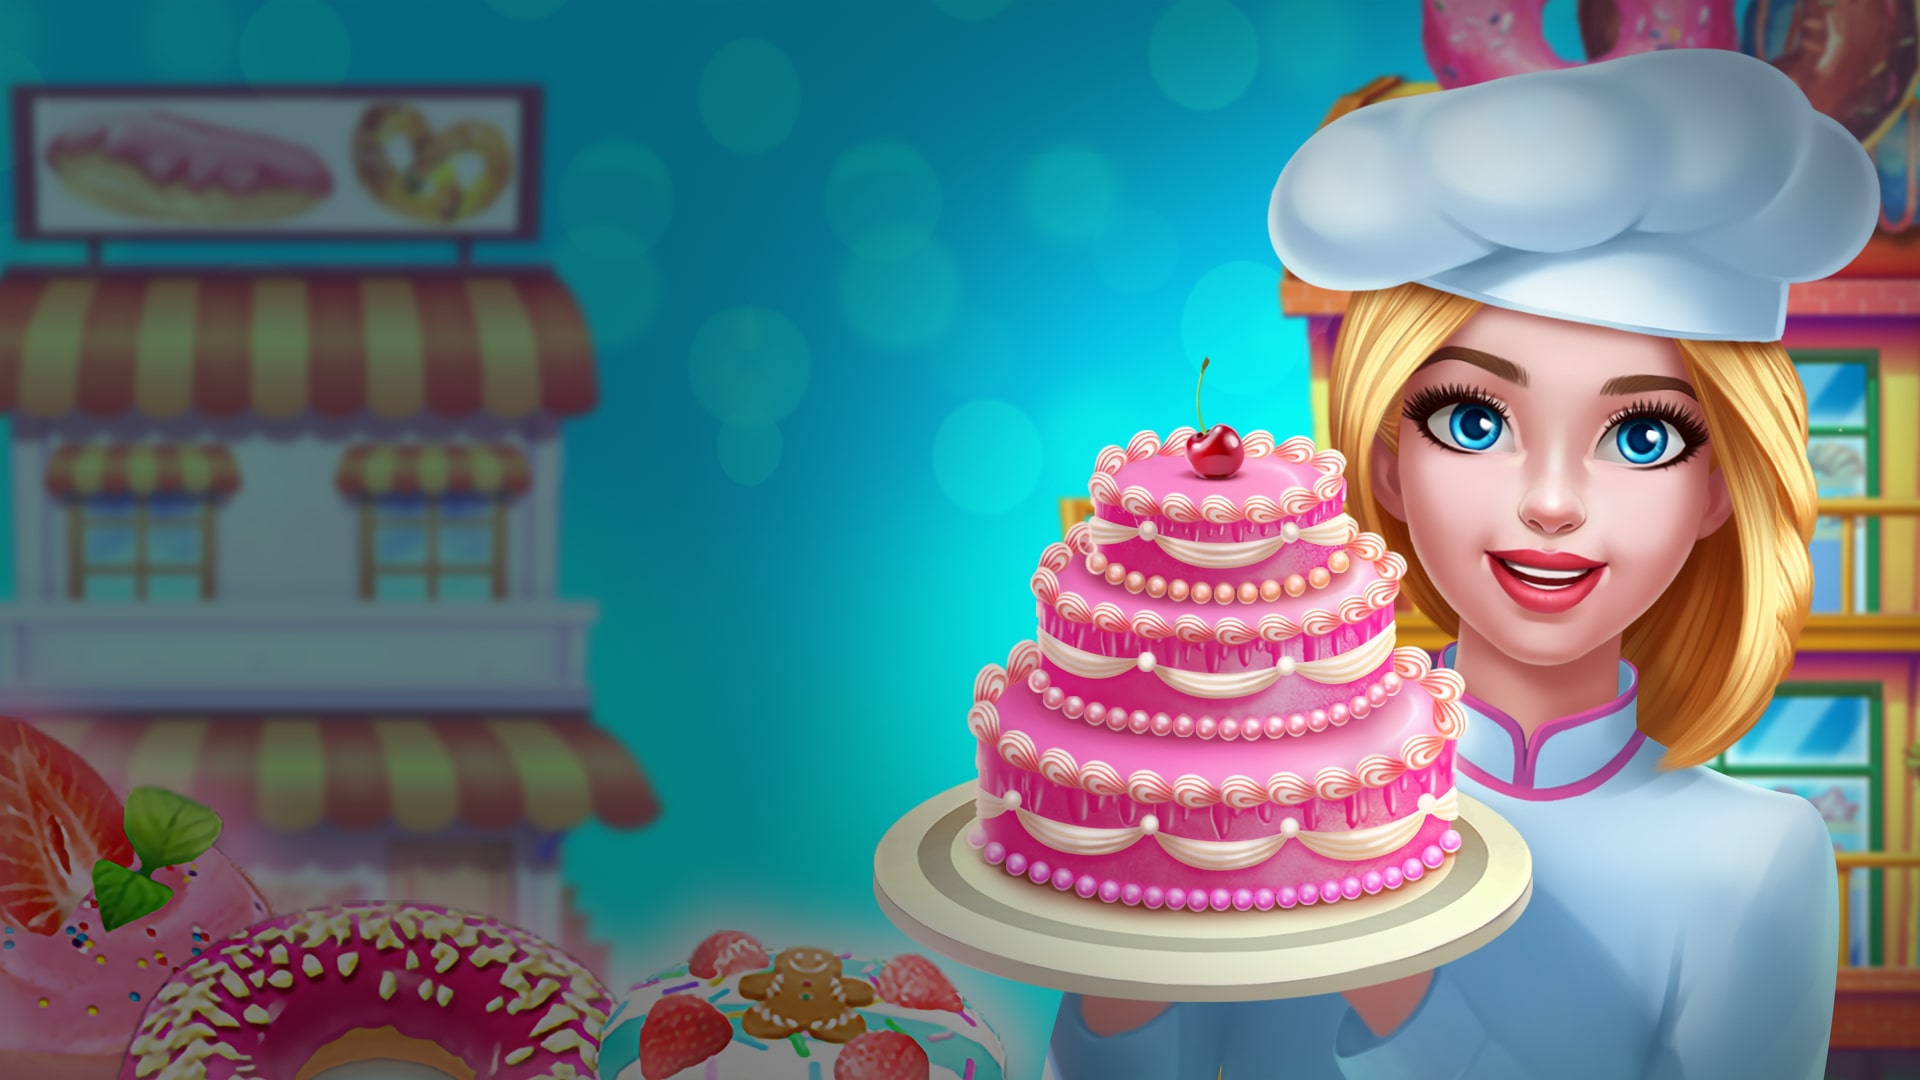 Fat Princess Adventures review - Let them eat cake